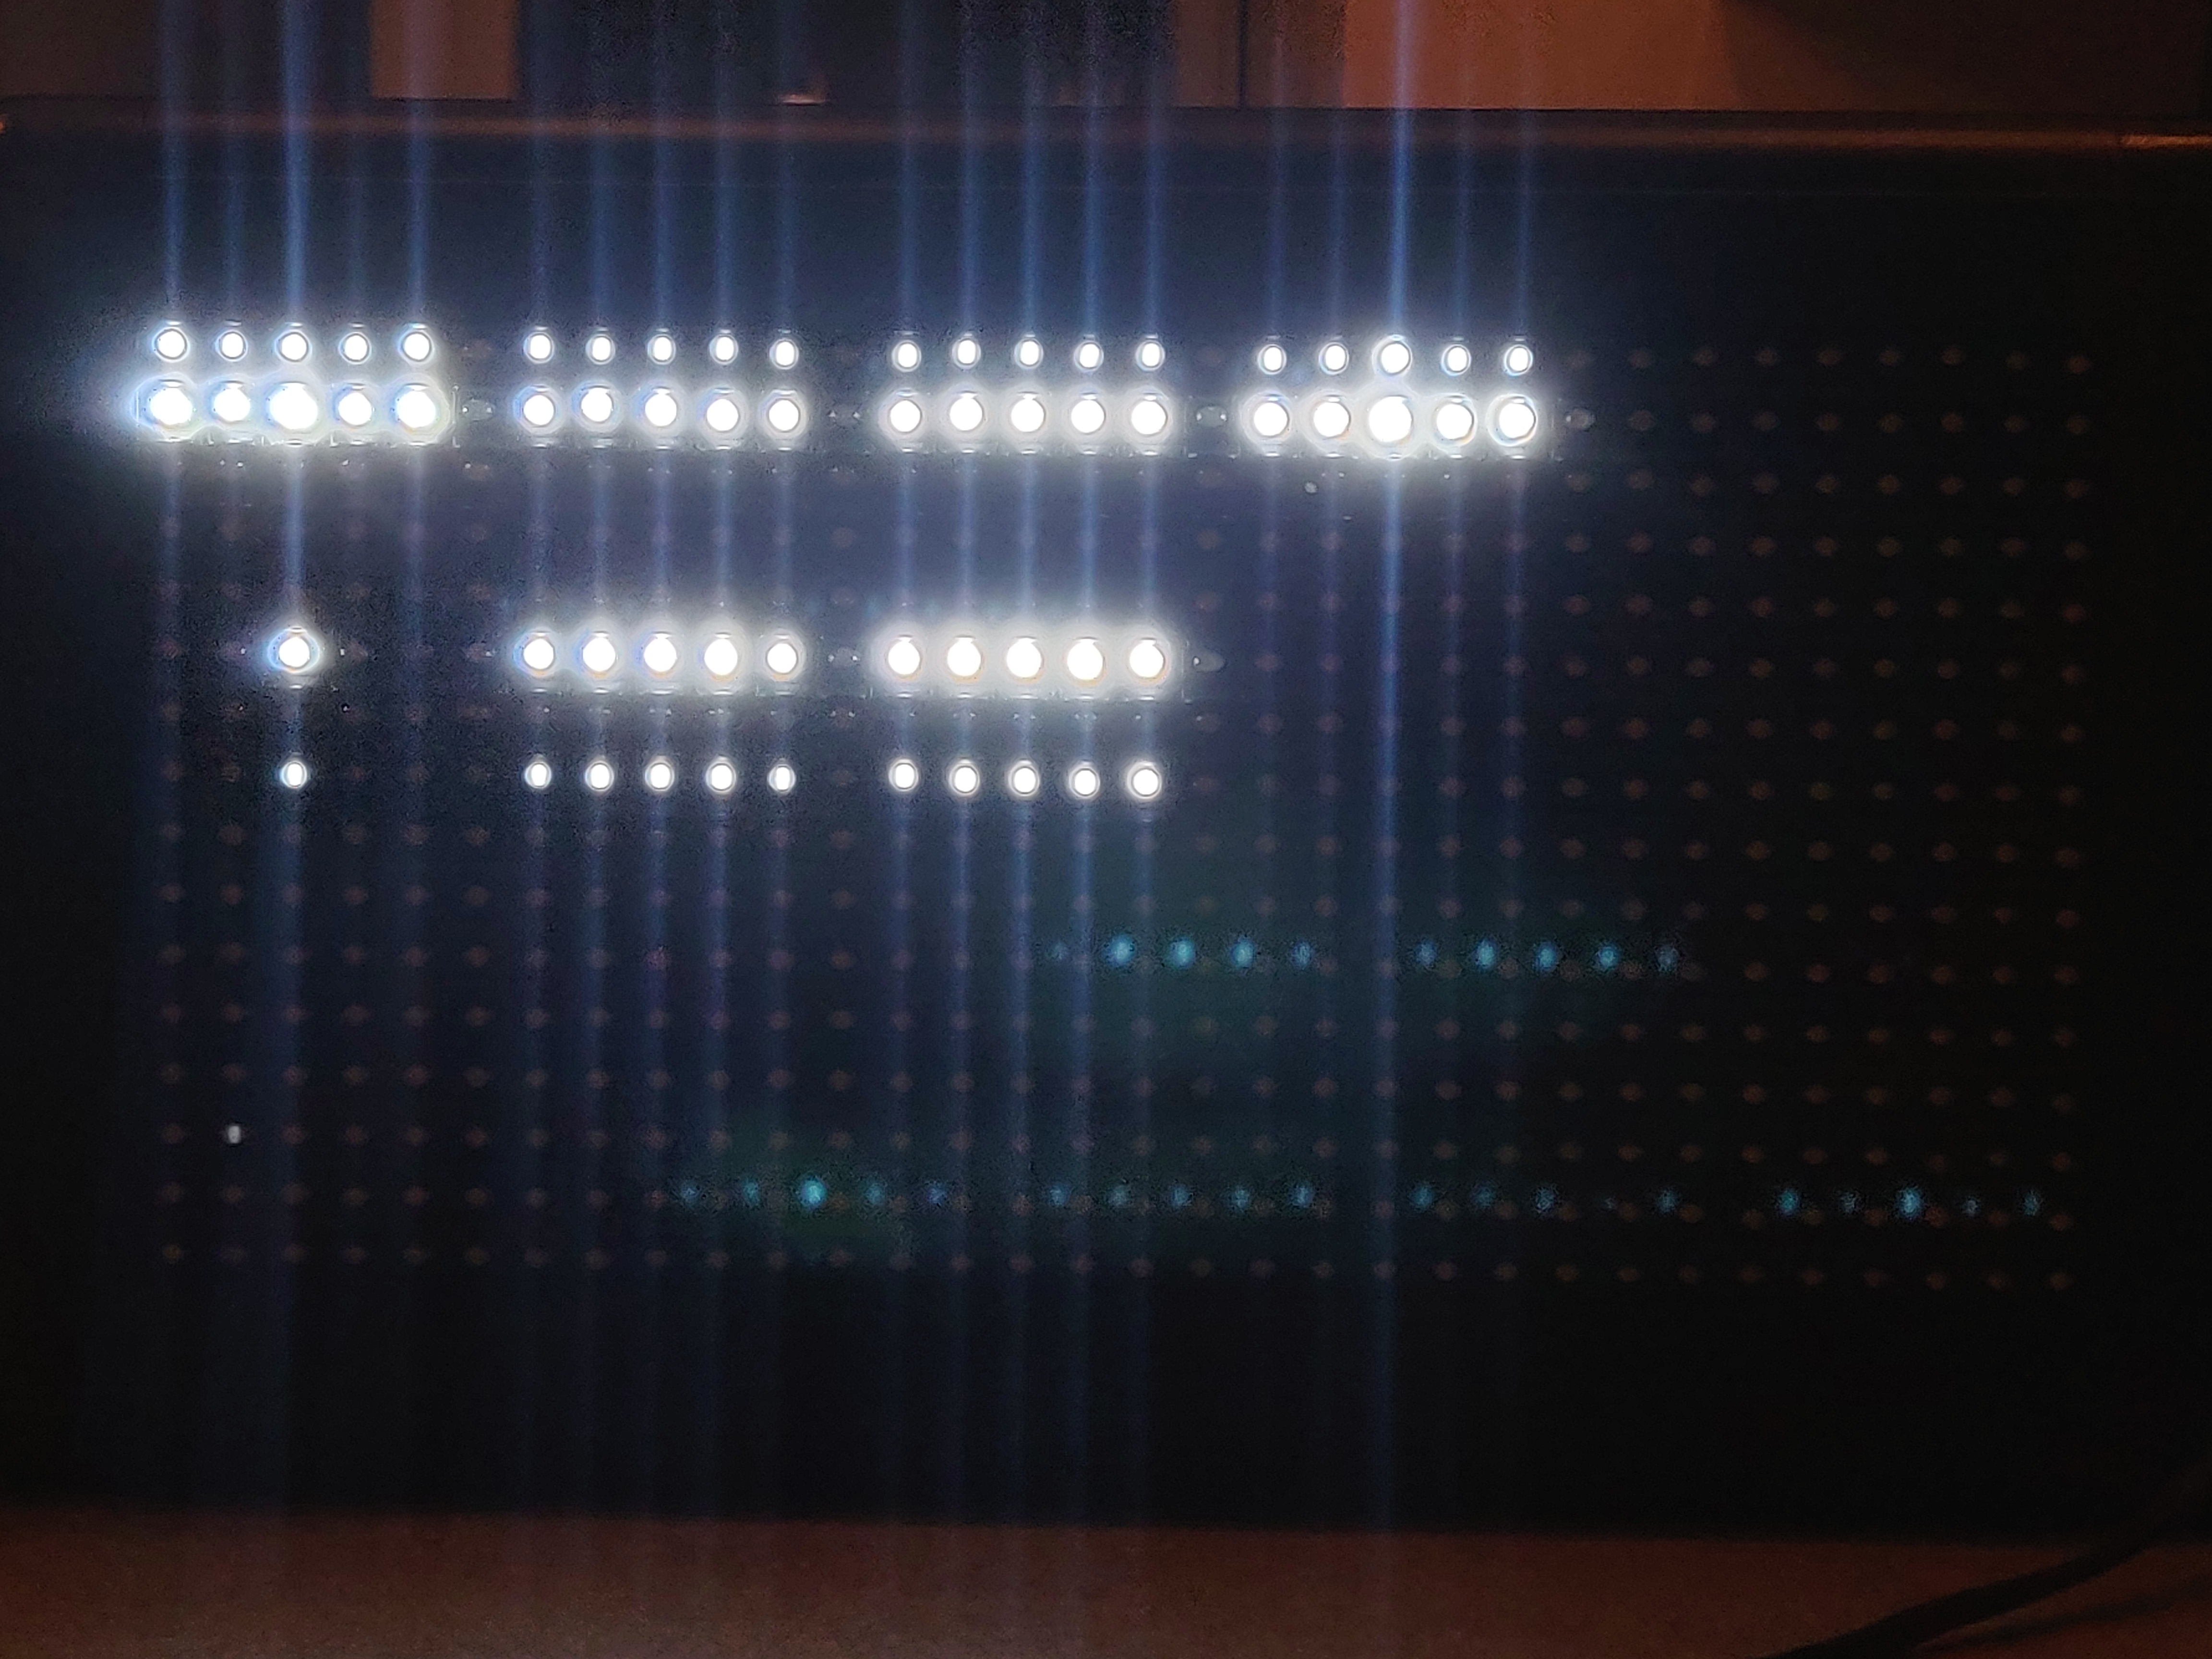 Fast LED Matrix Graphics For The ESP32